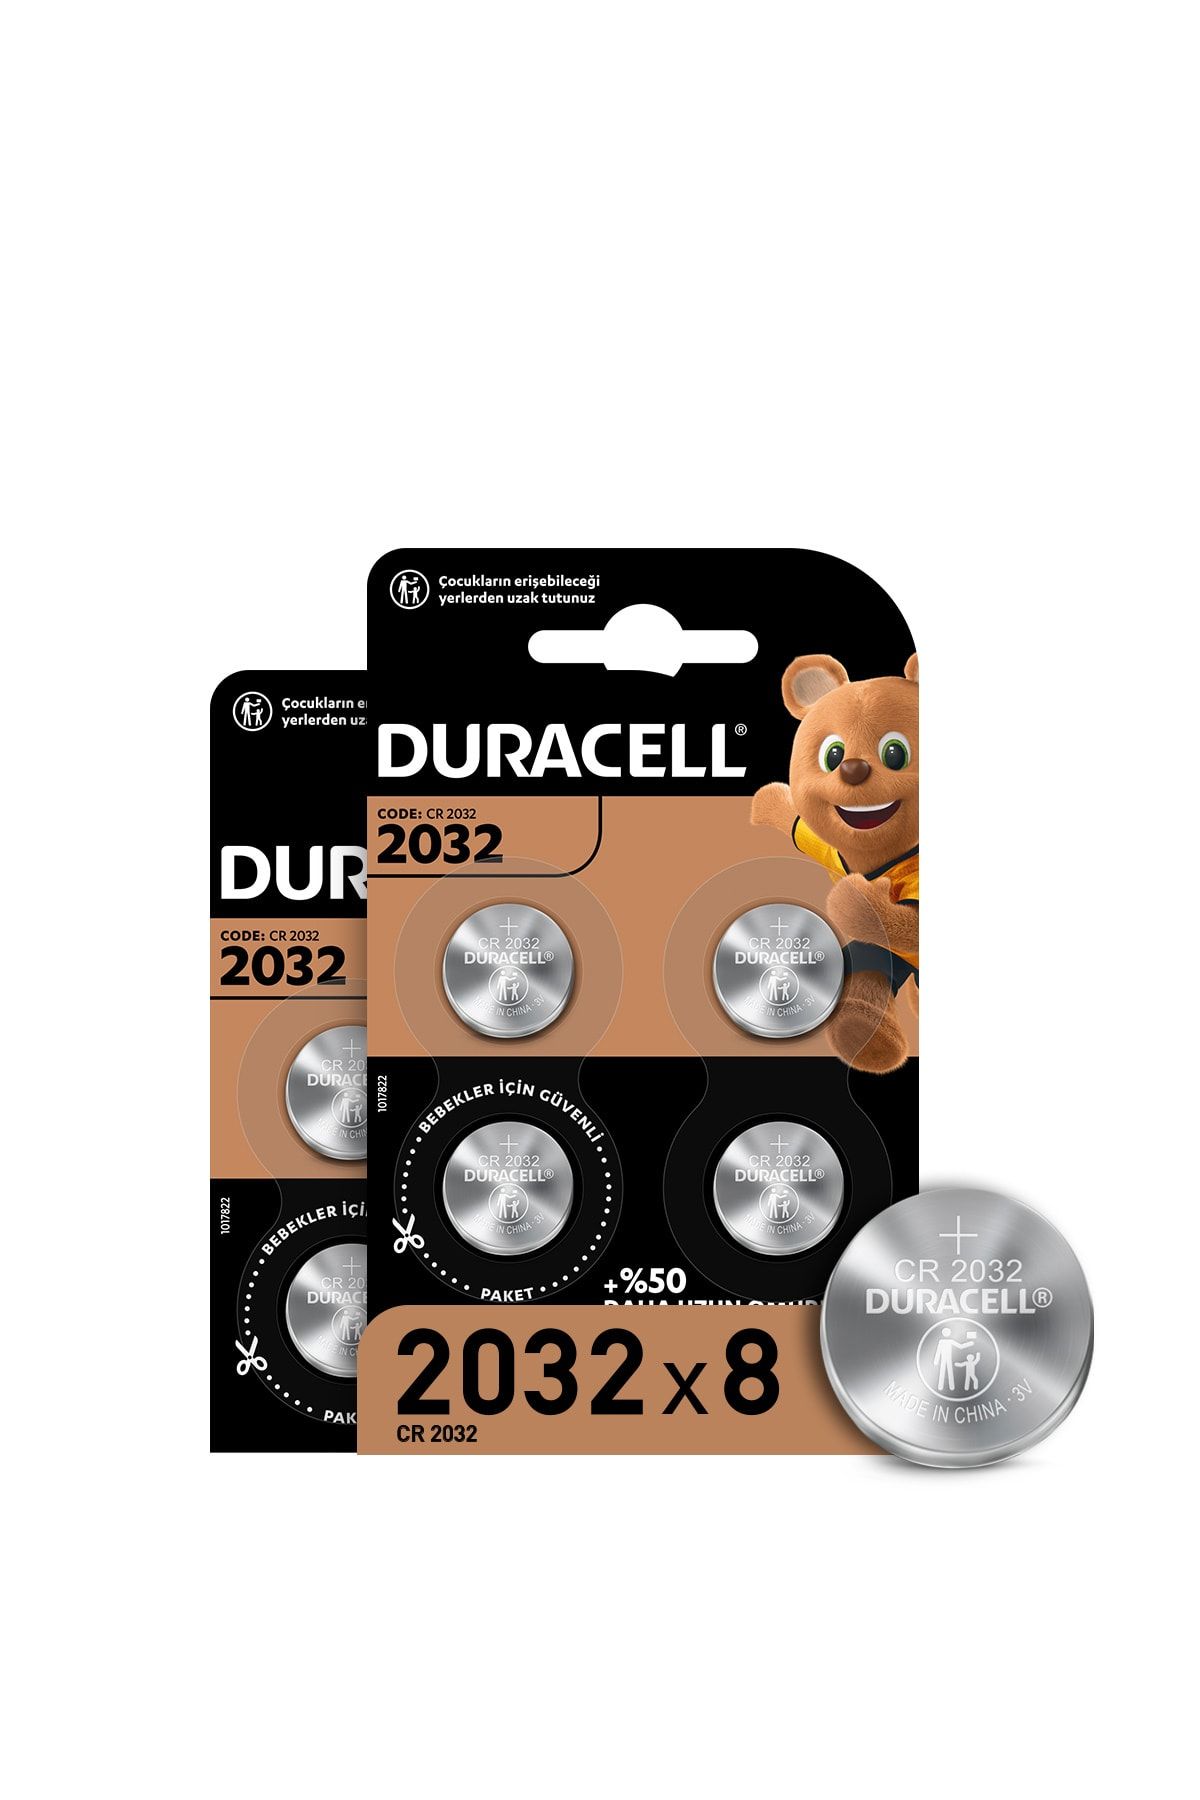 Duracell Özel 2032 Lityum Düğme Pil 3v, (CR2032) 8 Adet